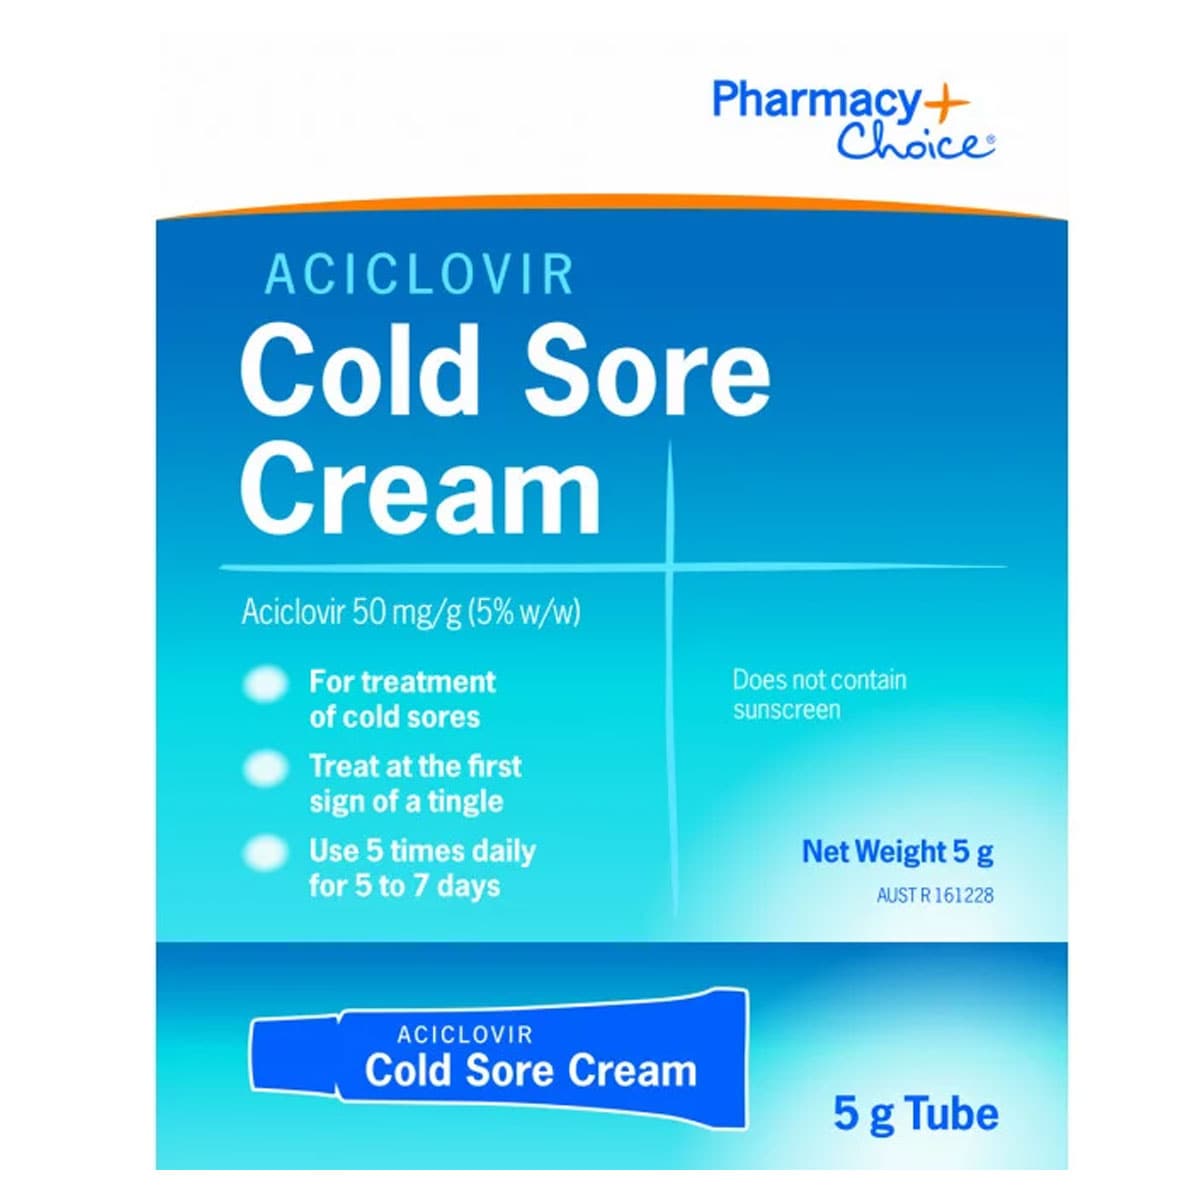 Pharmacy Choice Aciclovir Cold Sore Cream 5g